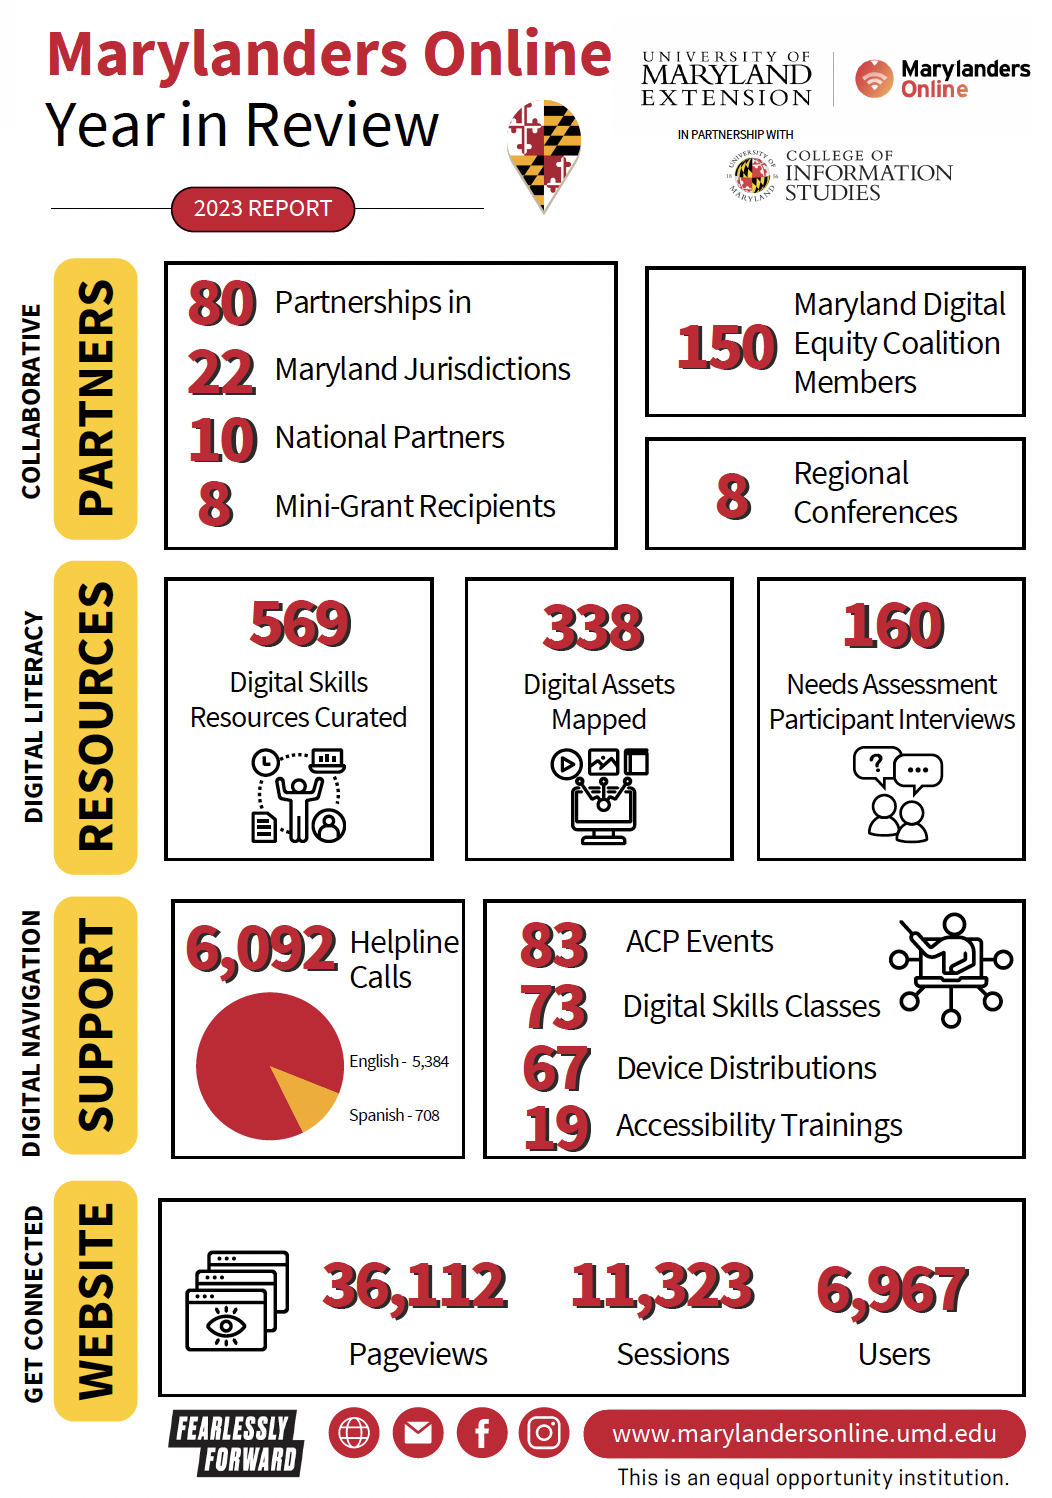 Marylanders Online 2023 Year in Review